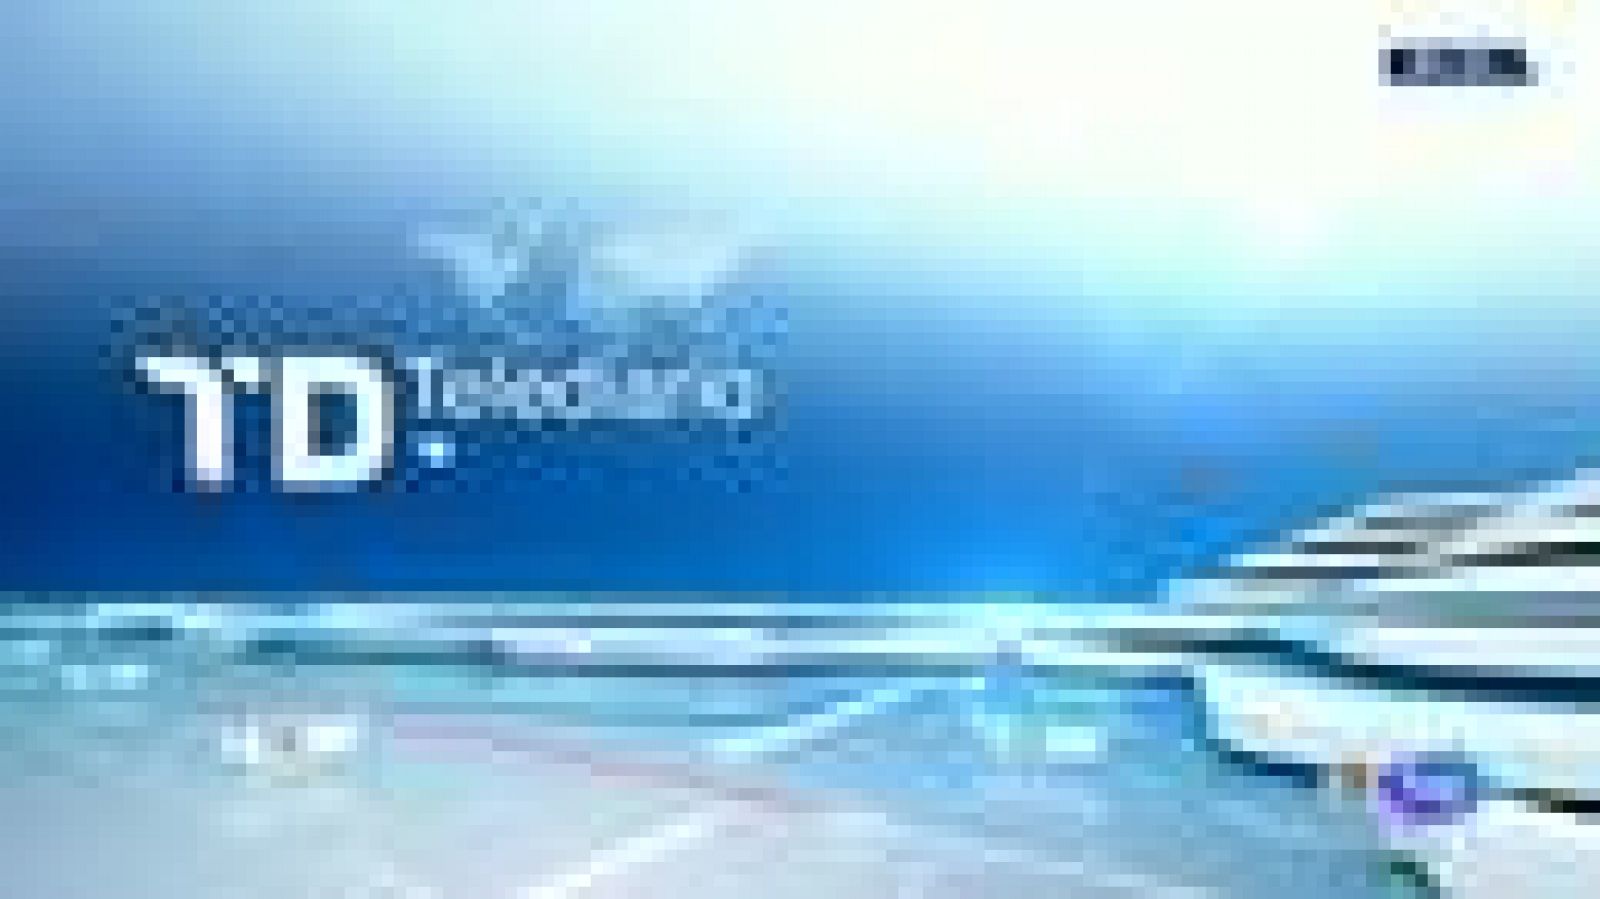 Telediario 1: Telediario Matinal en 4' - 09/10/12 | RTVE Play